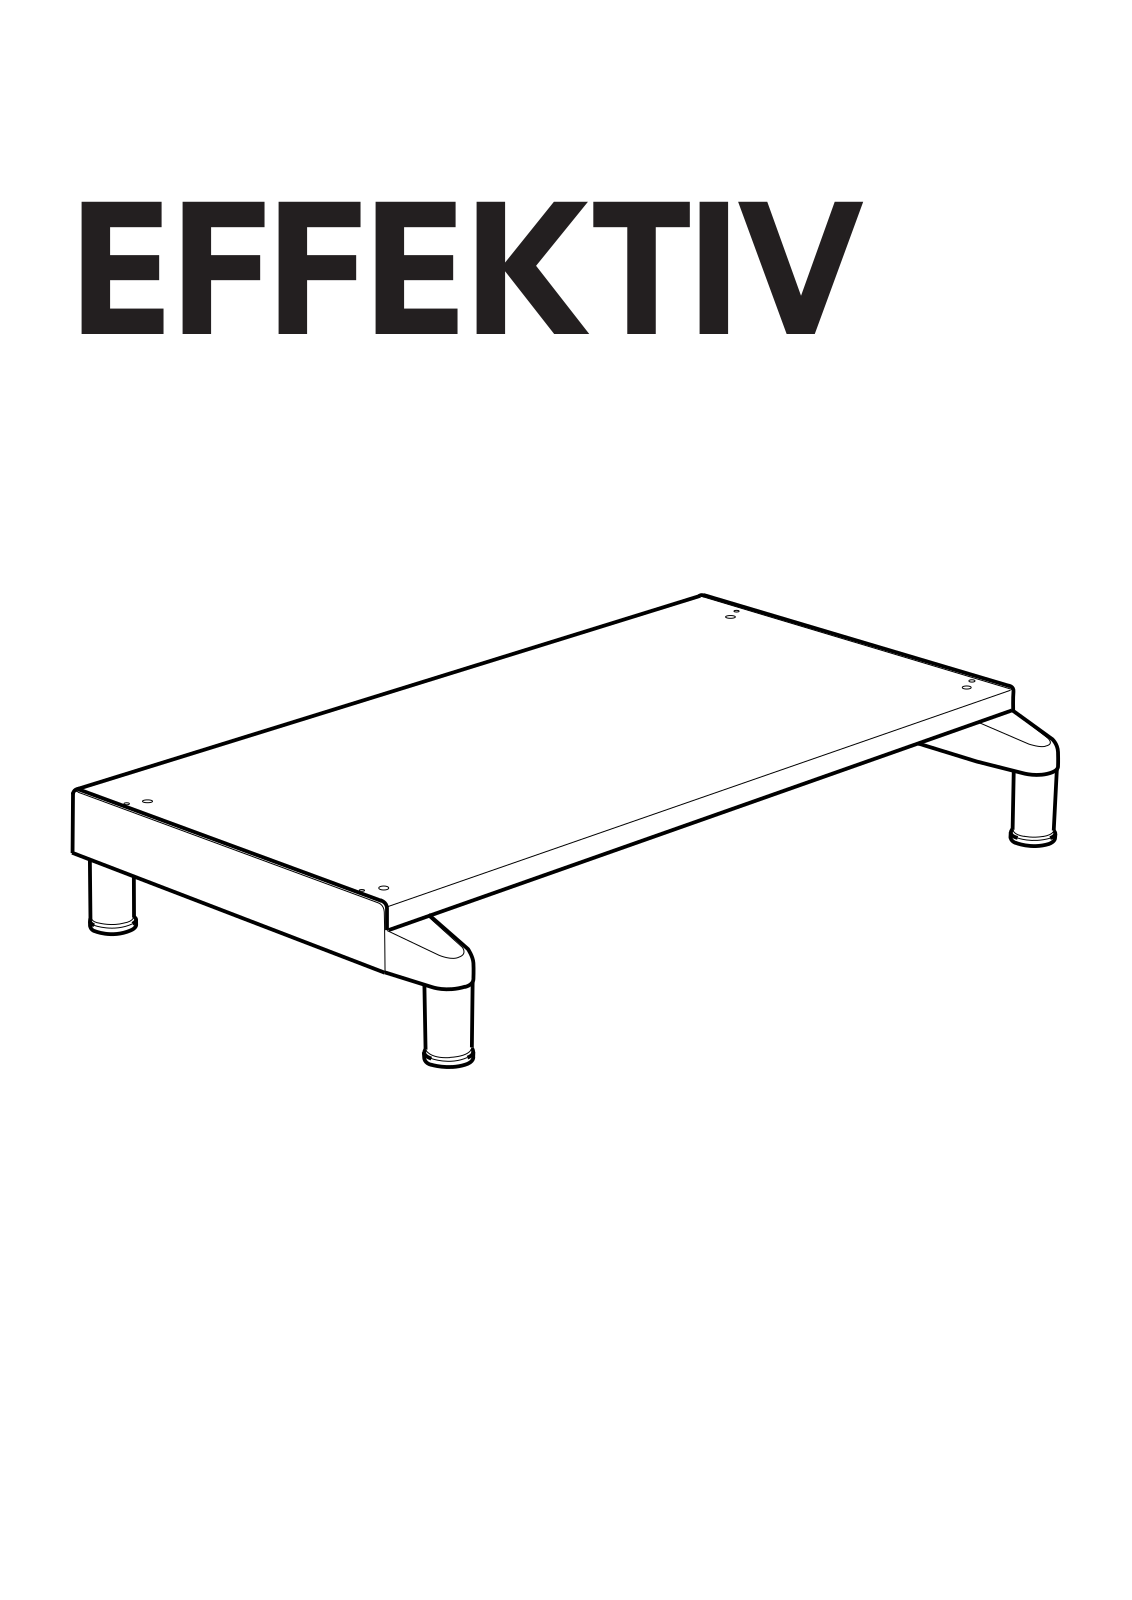 IKEA EFFEKTIV BASE-SUPPORT LEGS 33 1-2 Assembly Instruction